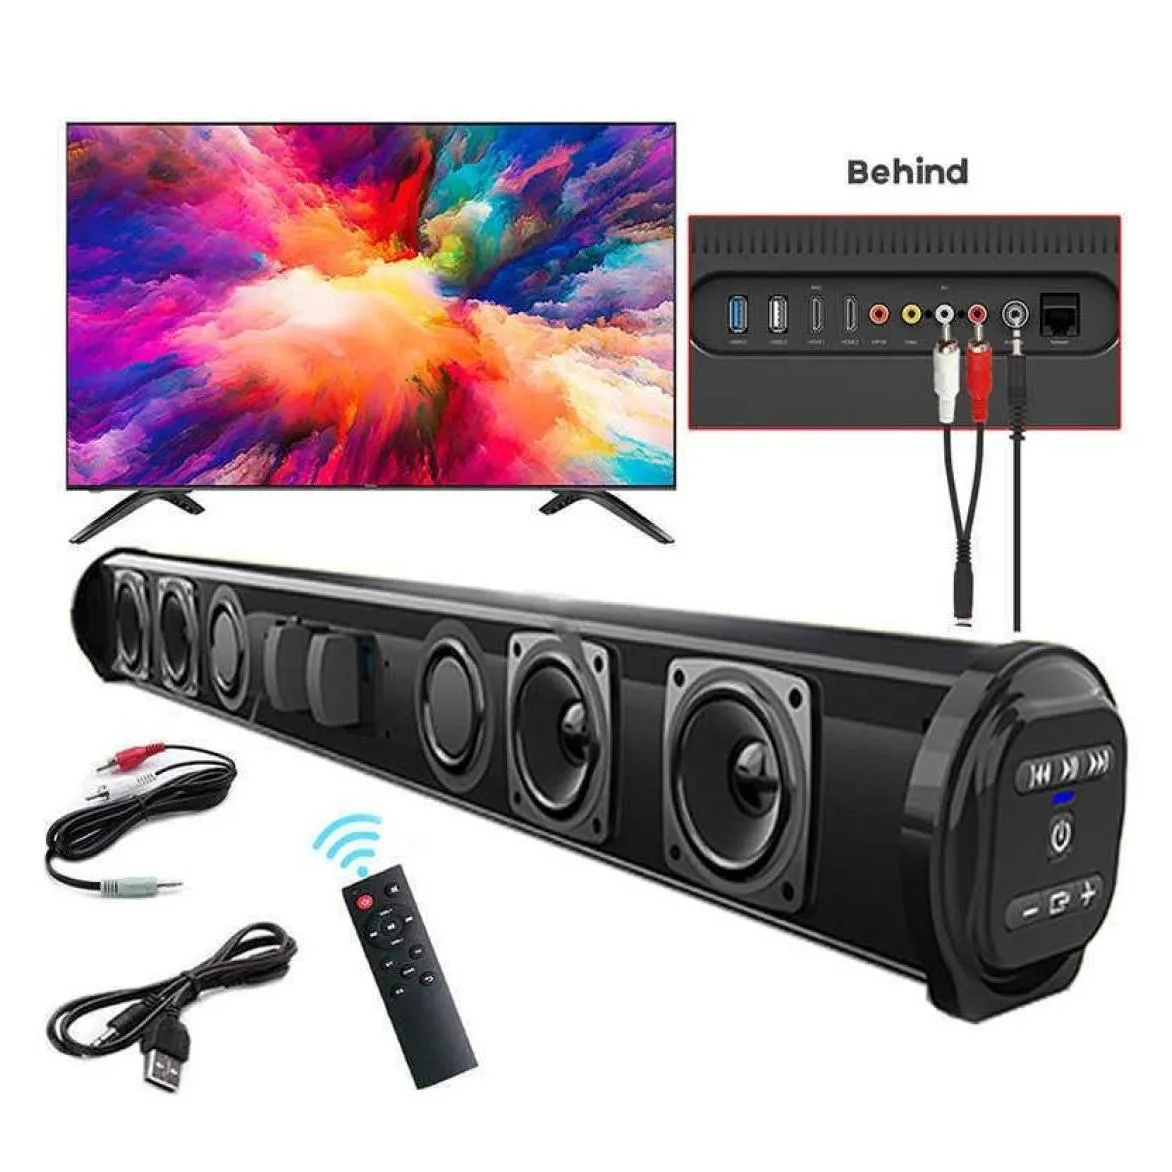 Hemmabiosystem trådlöst Bluetooth TV -projektor Sound Bar Speaker ER Power Wired Surround Stereo Theatre Cyt0117390686 Drop Deli DHK87